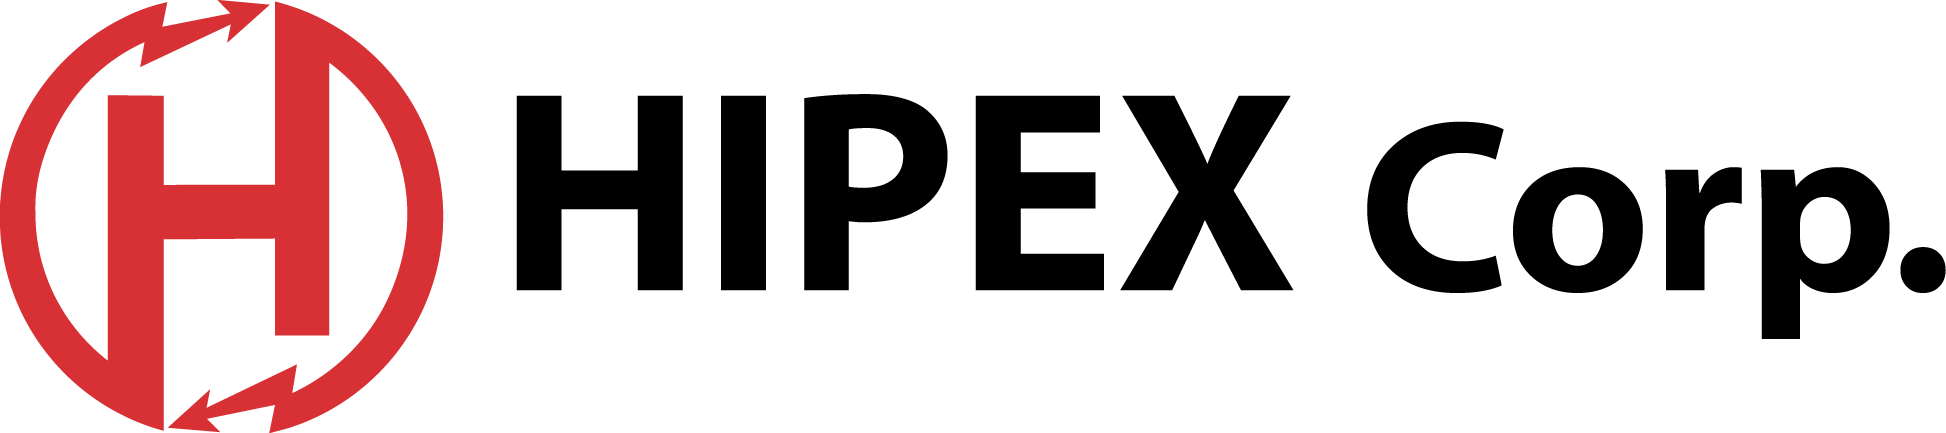 Hipex Corp Logo Edmonton